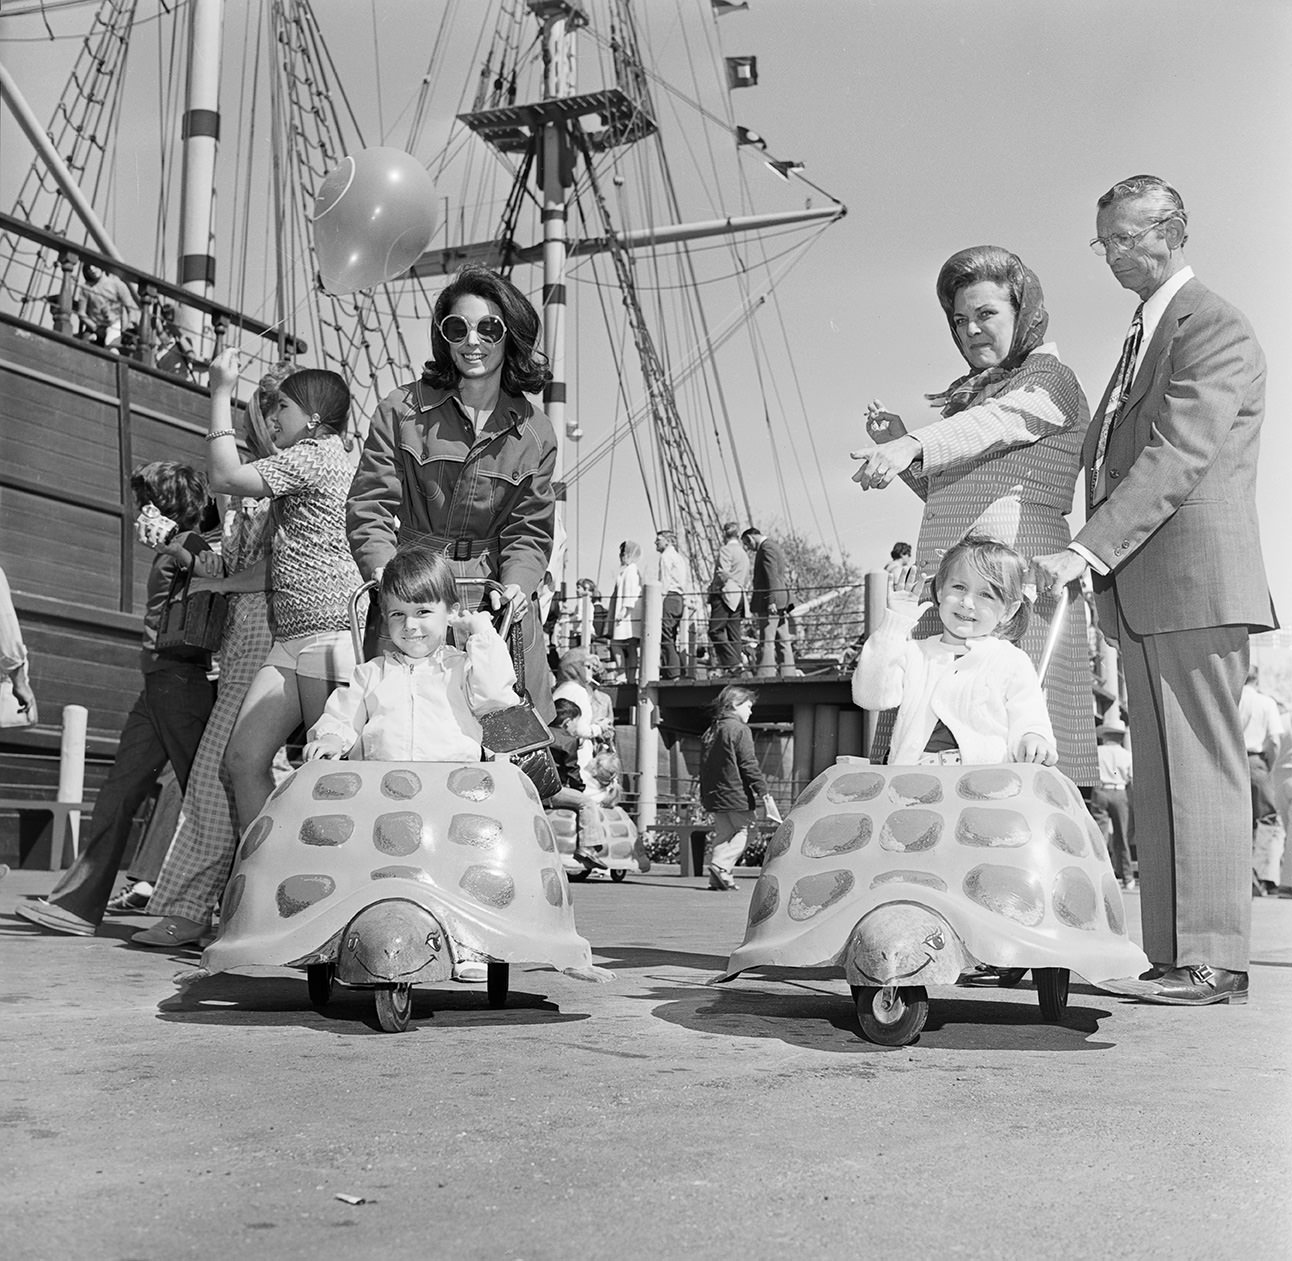 Visitors to Seven Seas, children riding in turtle cars, Arlington, Texas, 1972